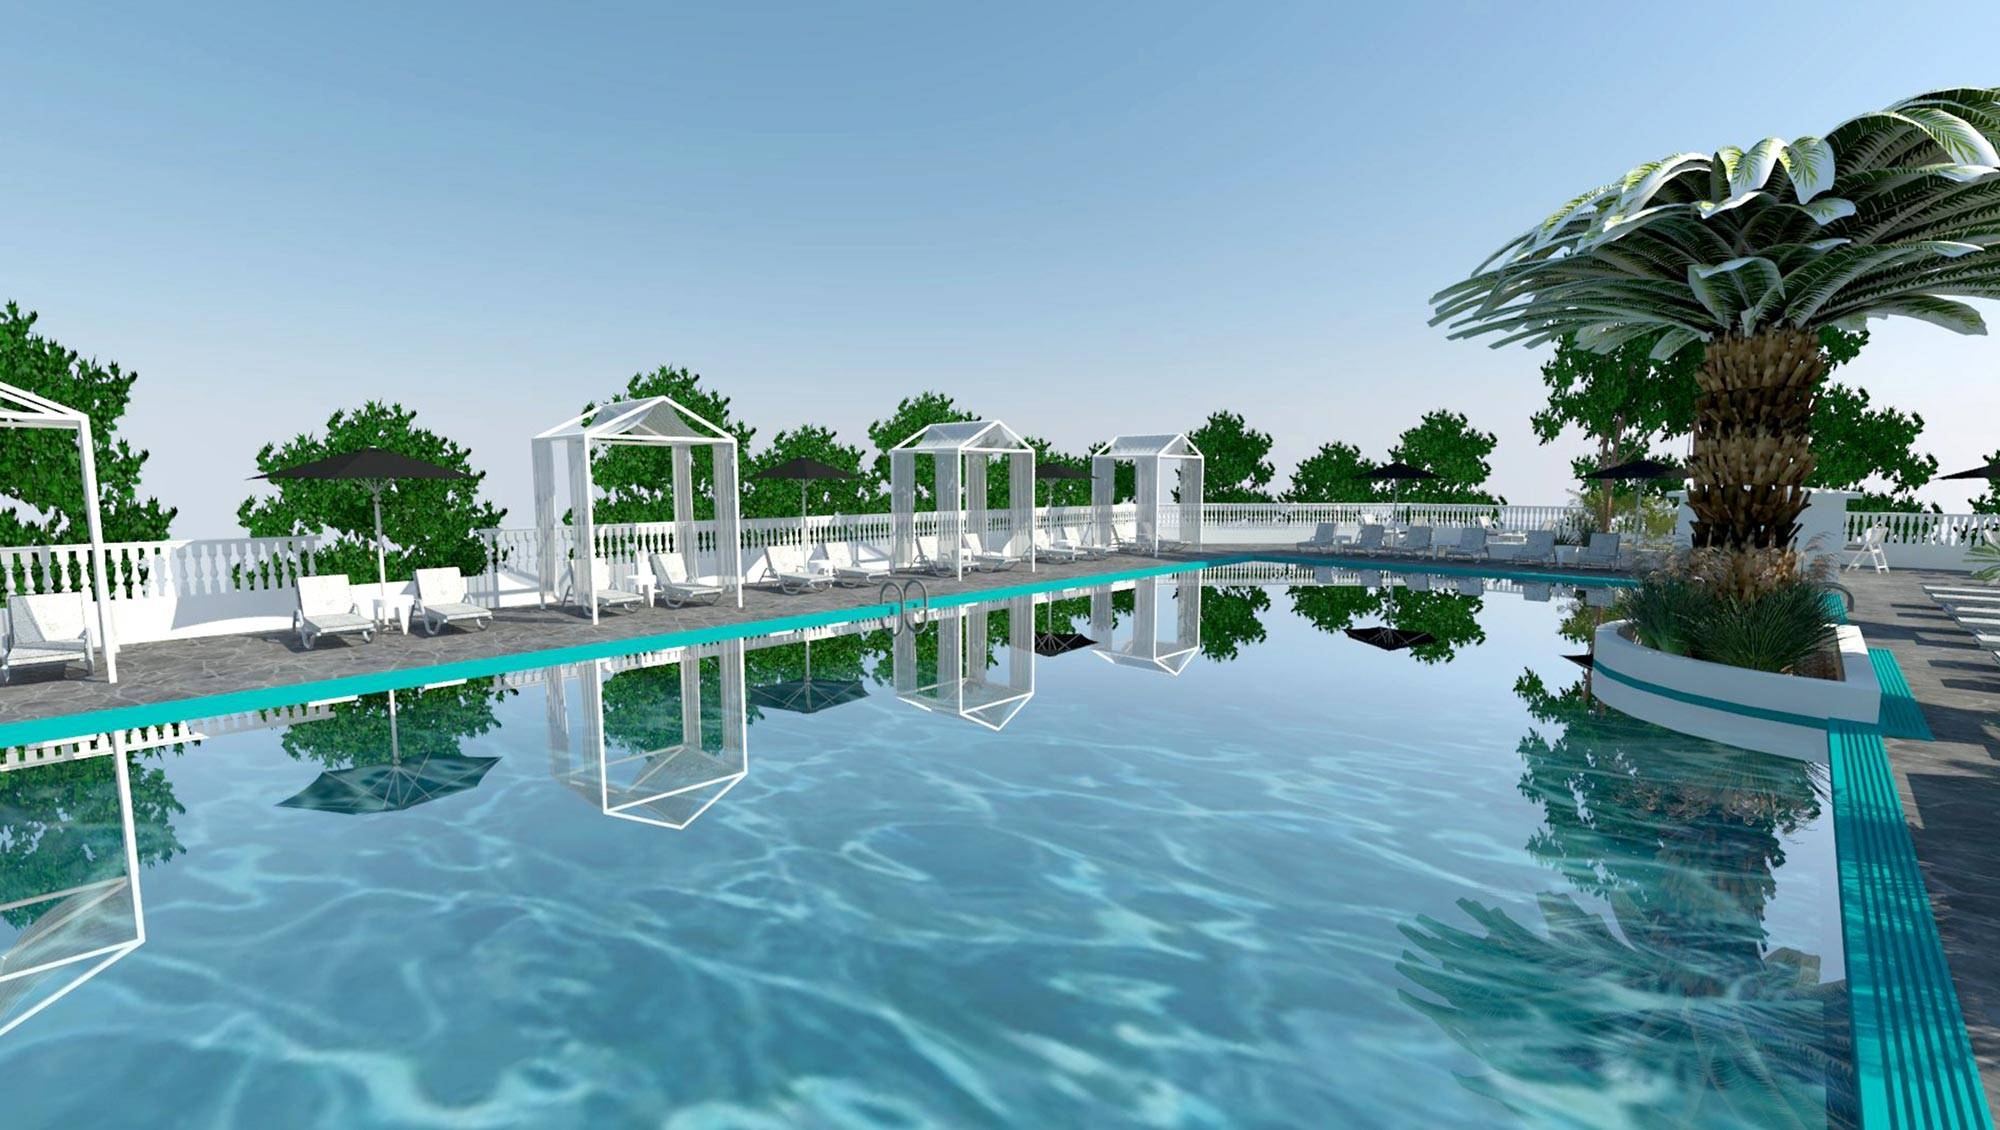 4* Bianco Olympico Beach Resort - Παραλία Βατοπεδίου, Χαλκιδική ✦ -20% ✦ 3 Ημέρες (2 Διανυκτερεύσεις) ✦ 2 άτομα ✦ 12 ✦ 01/06/2022 έως 09/06/2022 και 13/06/2022 έως 18/06/2022 και 13/09/2022 έως 26/09/2022 ✦ Μπροστά στην παραλία!